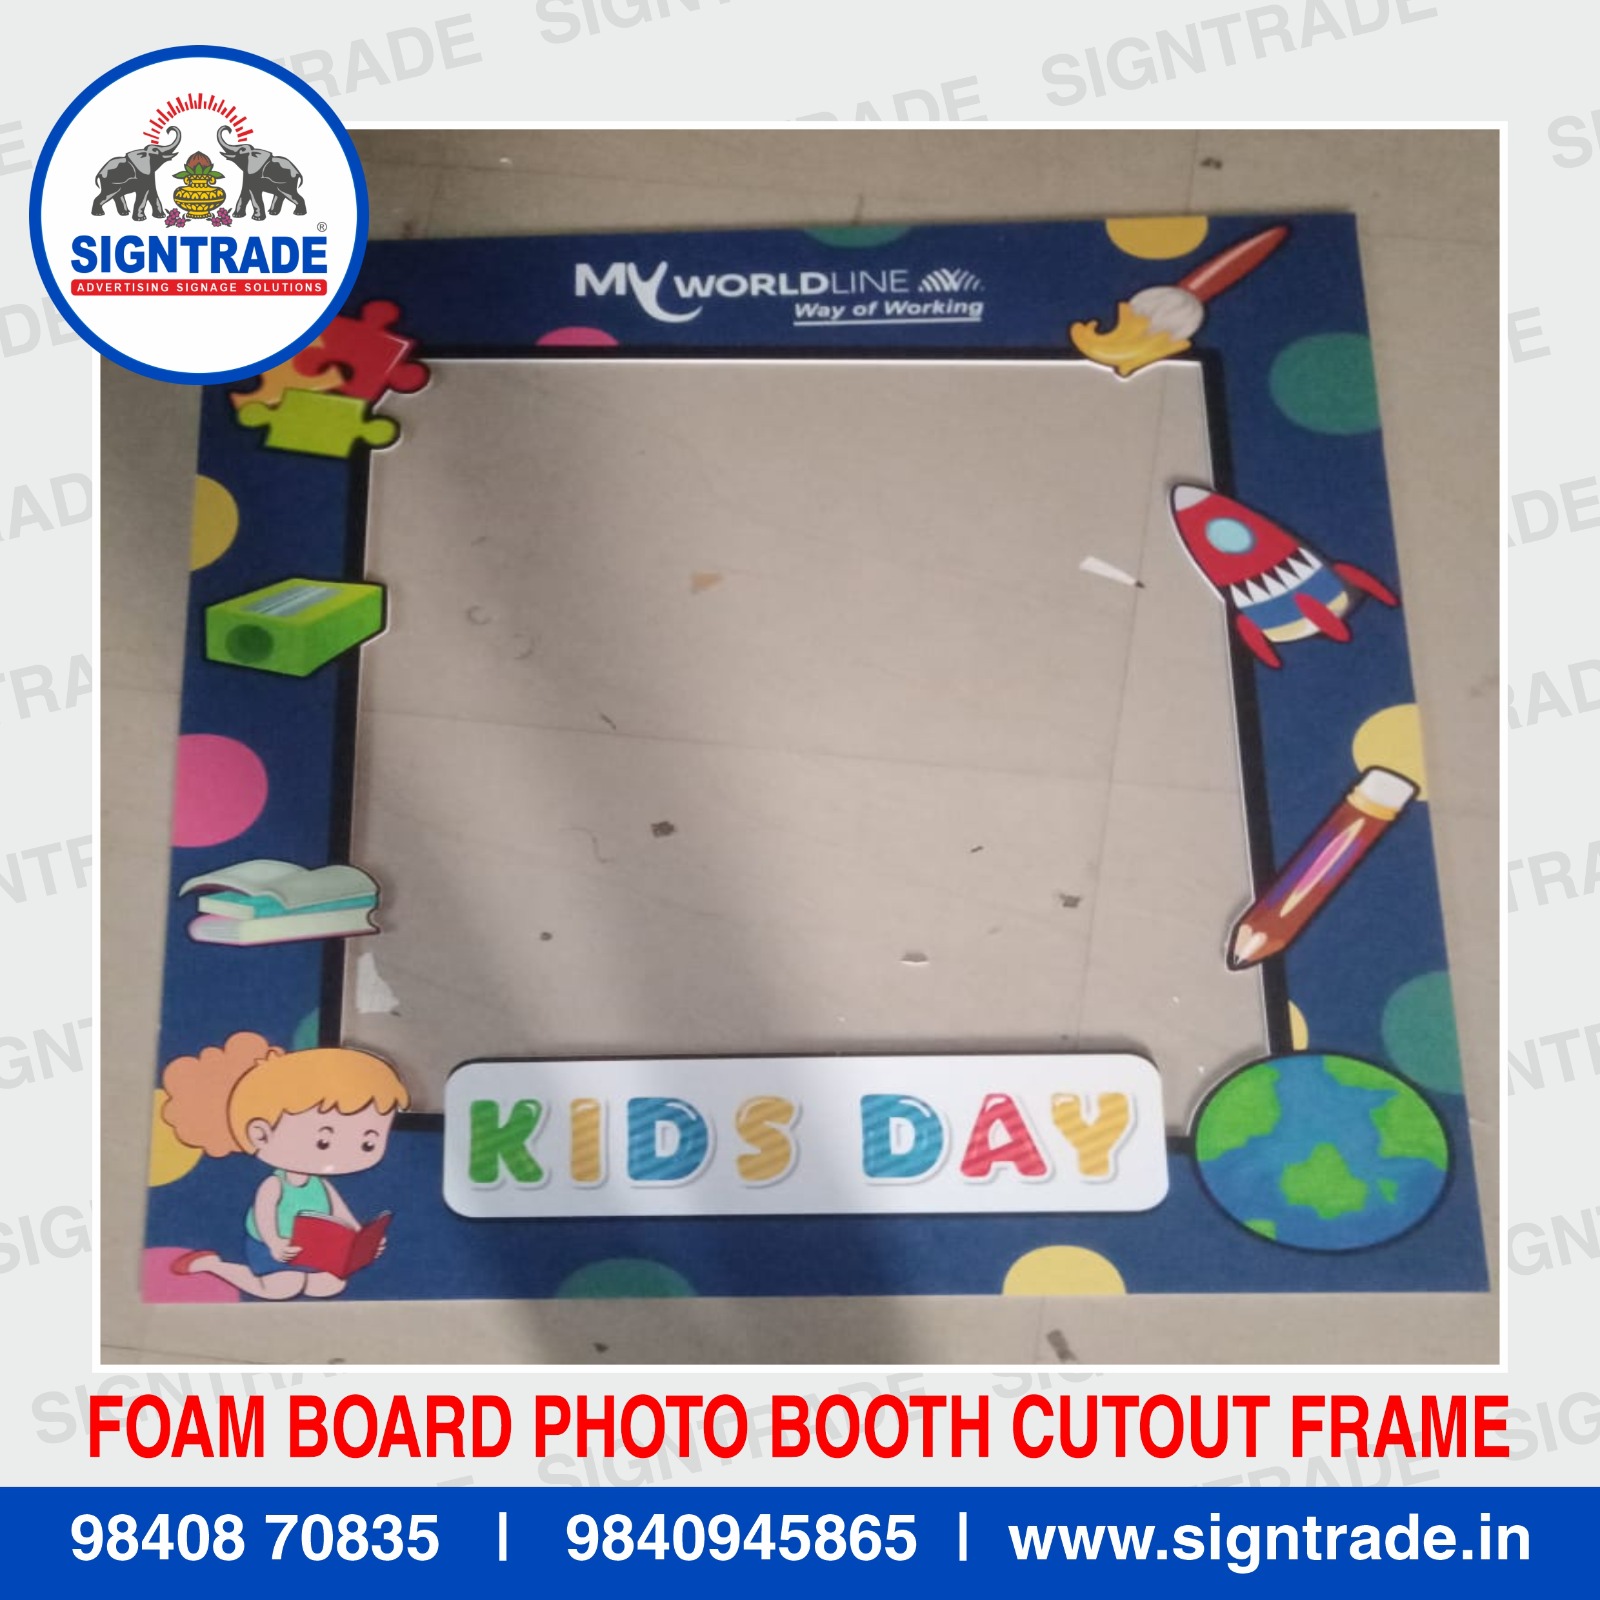 Foam Board Cutout Cut Out Display Stand in Chennai